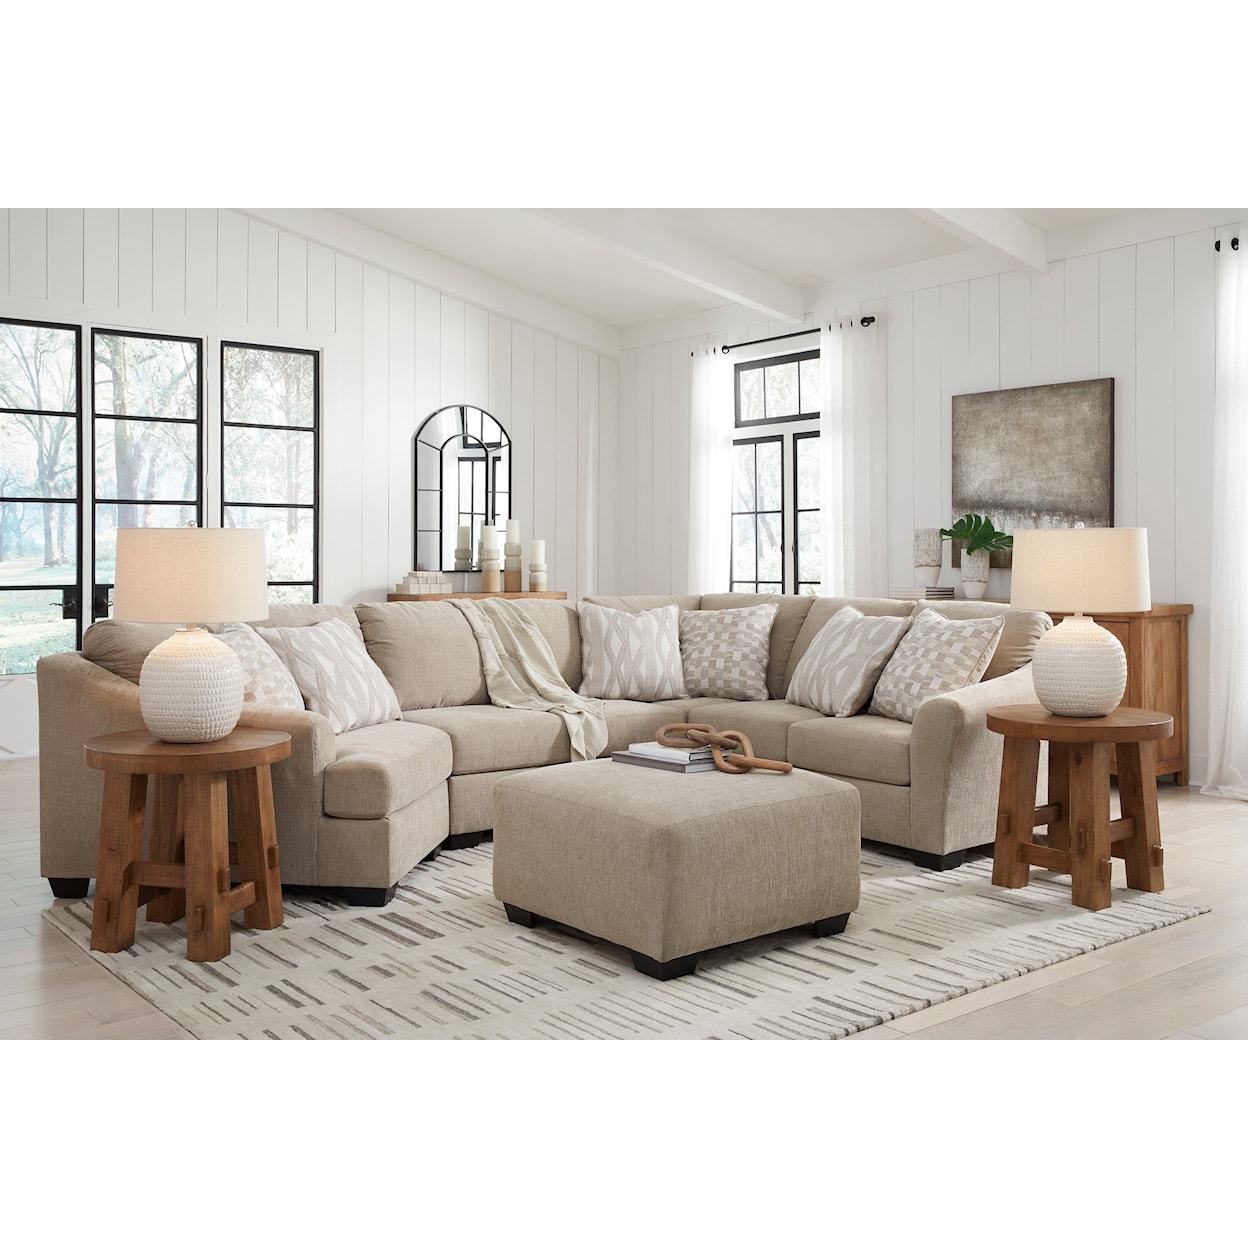 Michael Alan Select Brogan Bay Living Room Set